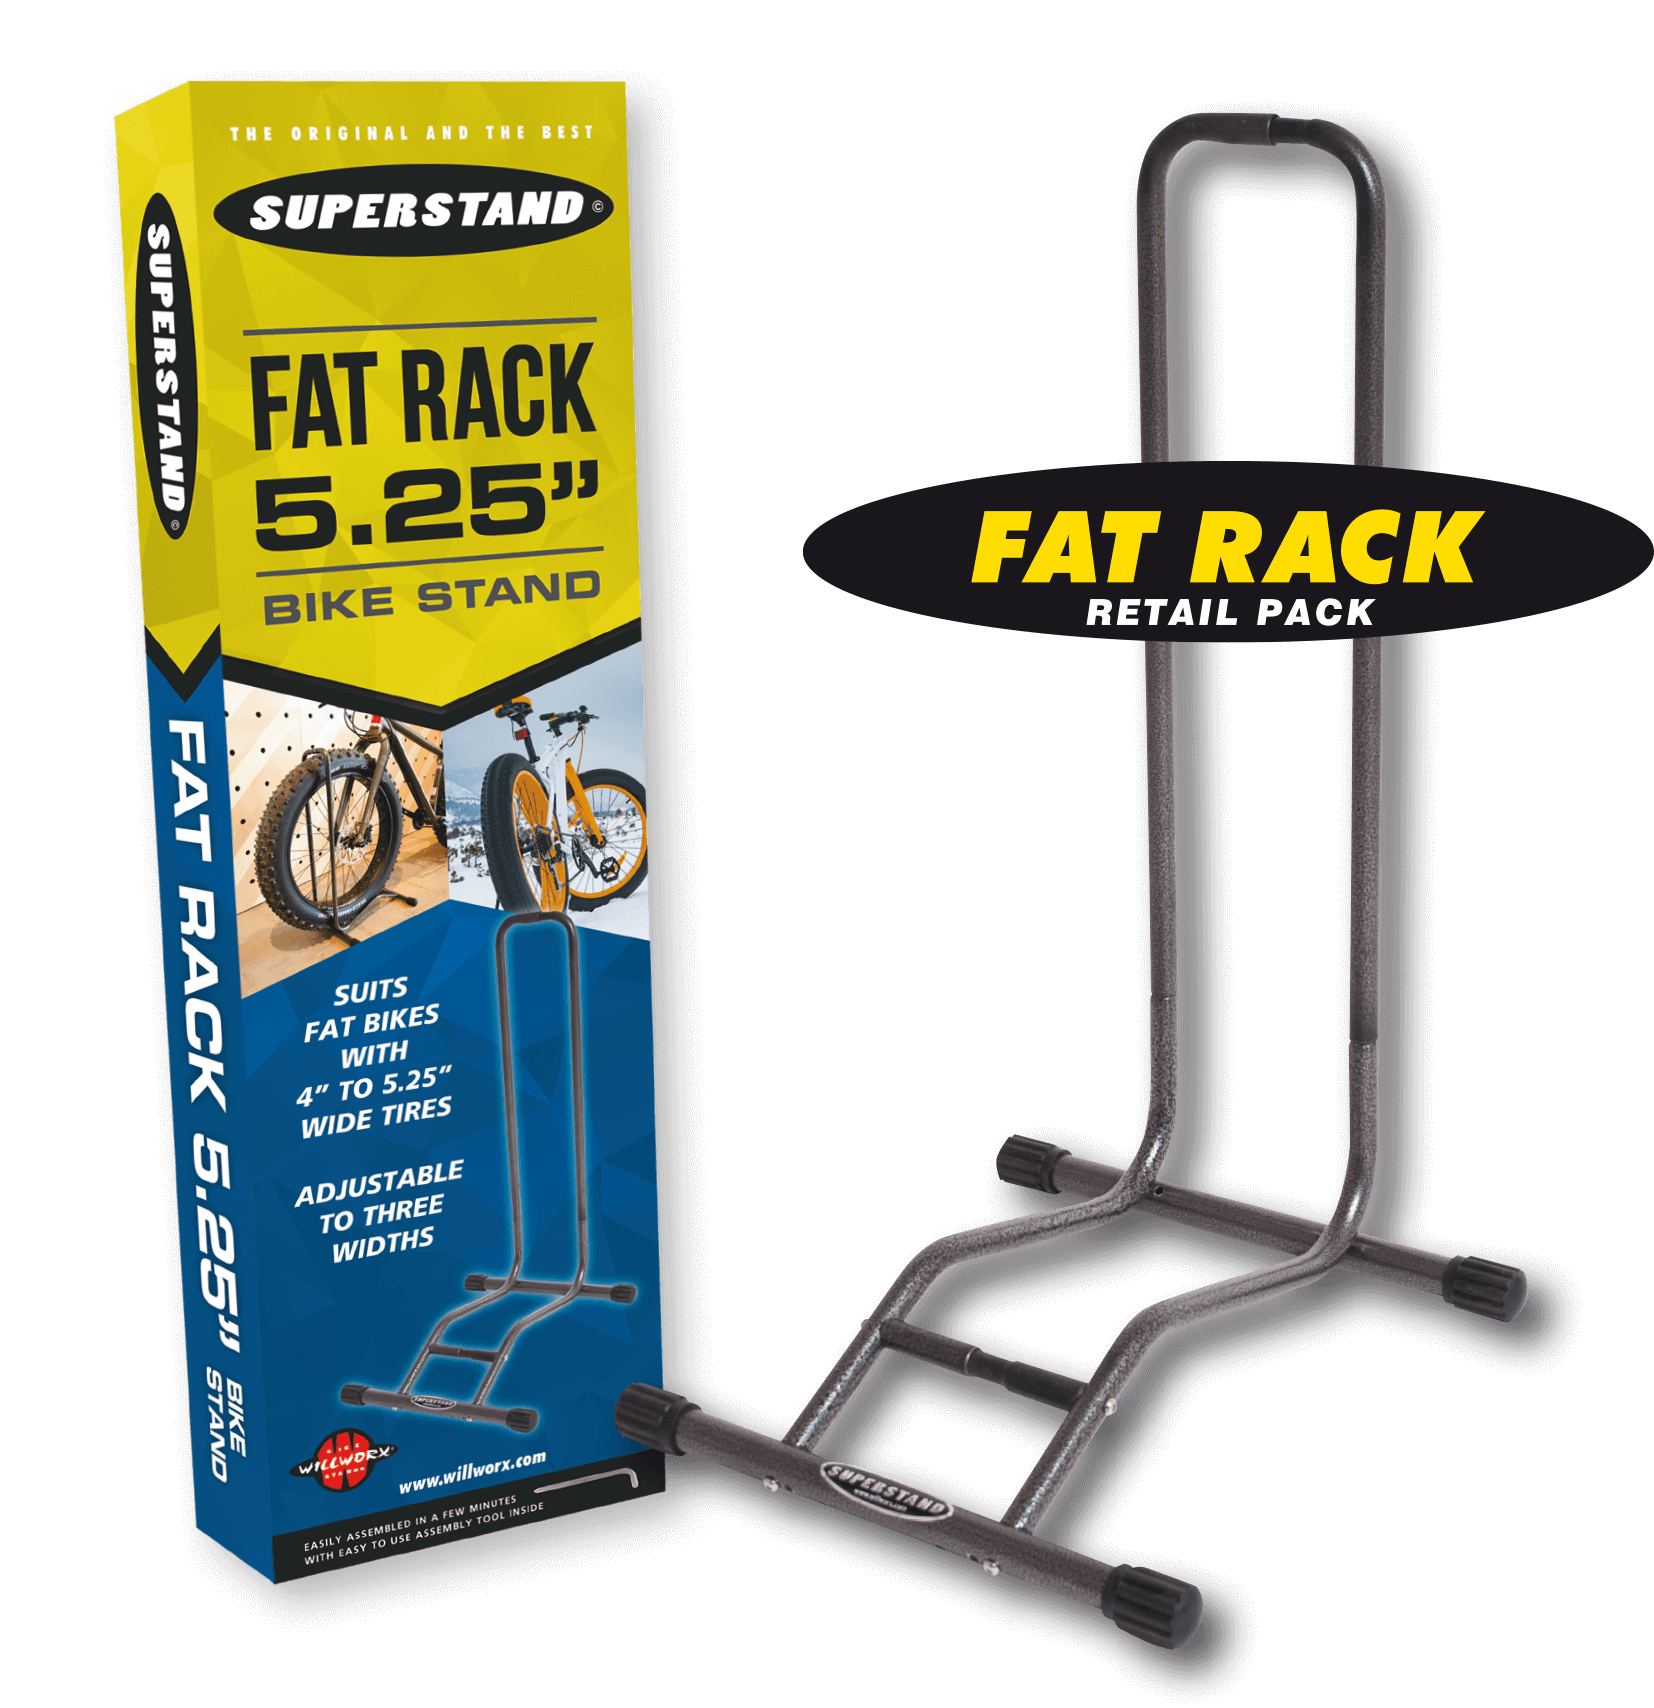 Fat-Rack-Retail-Pack